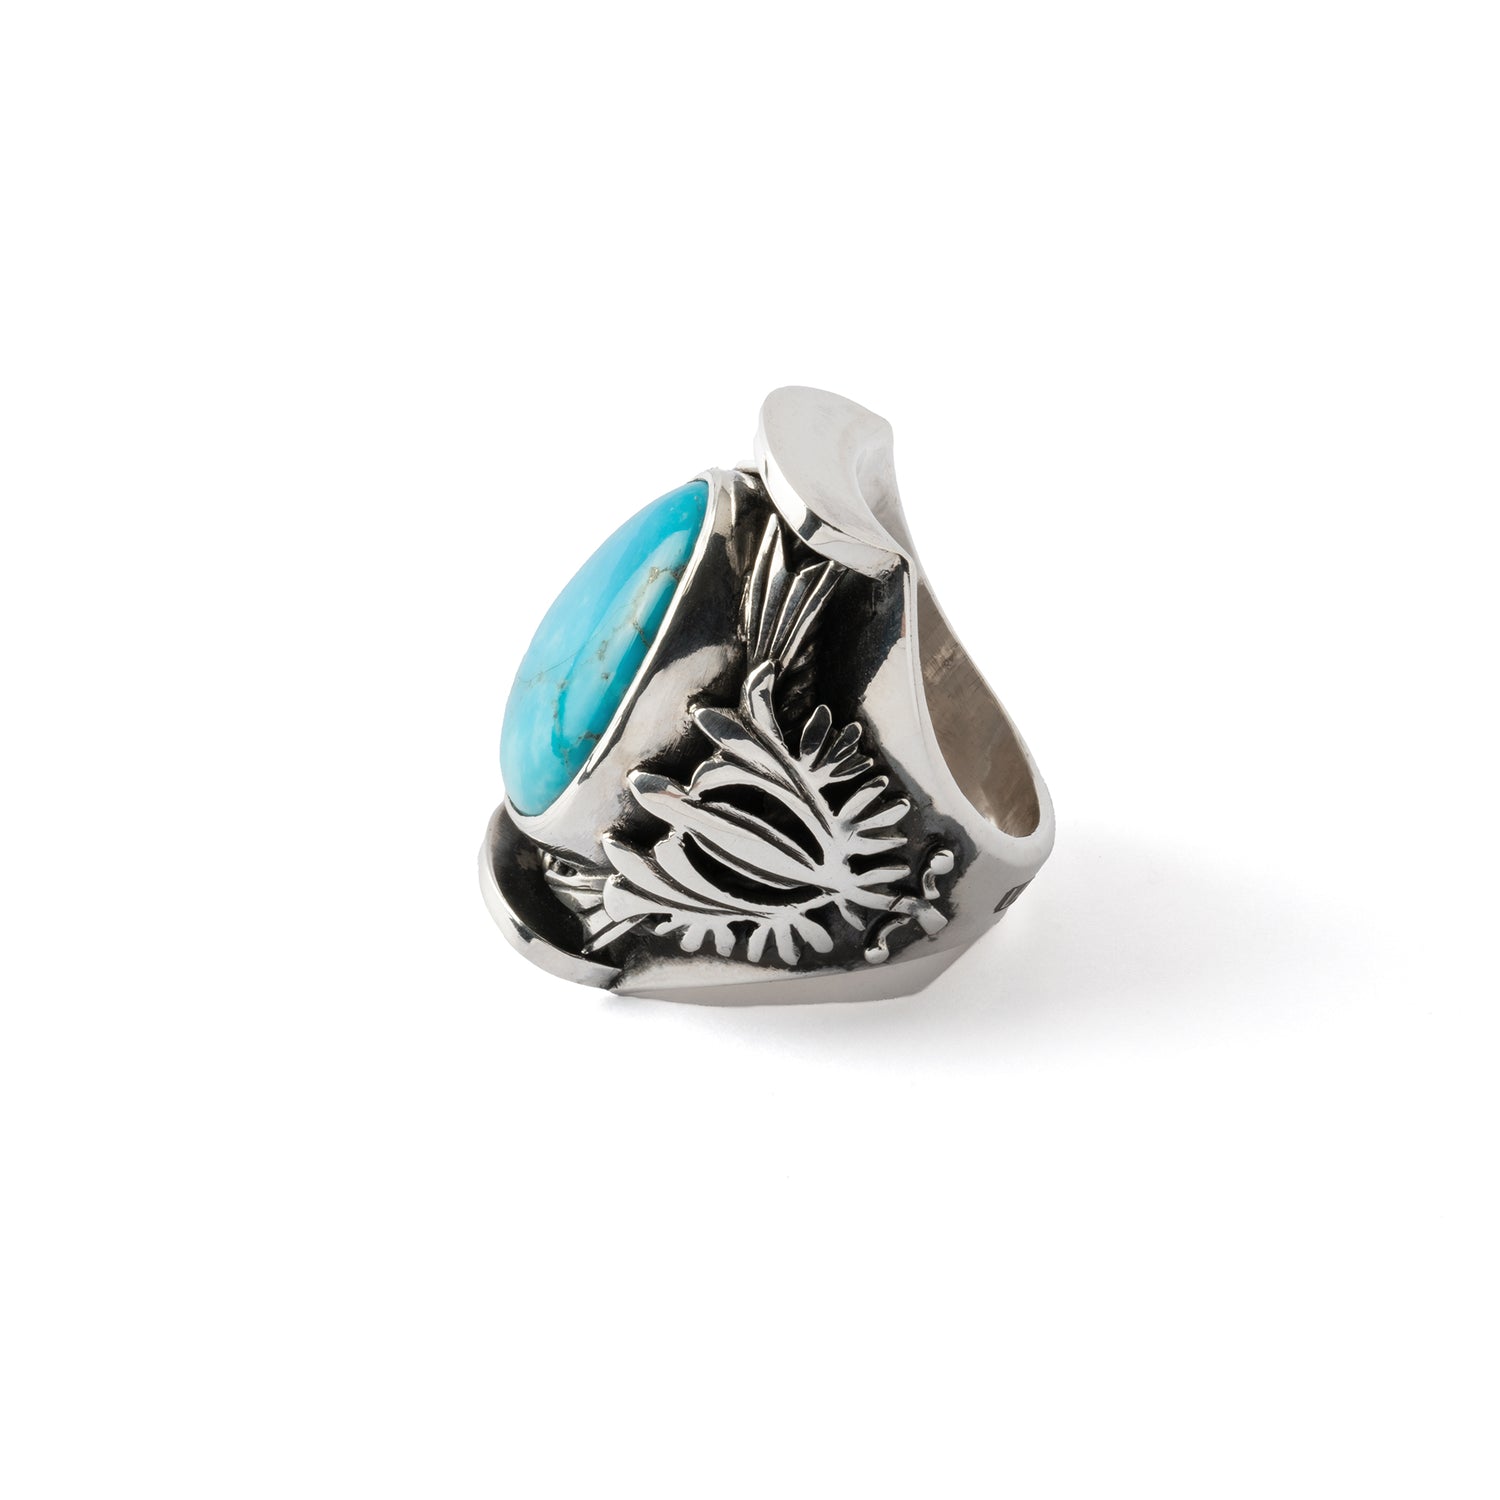 Hallmarked Silver Saddle Ring with Tibetan Turquoise